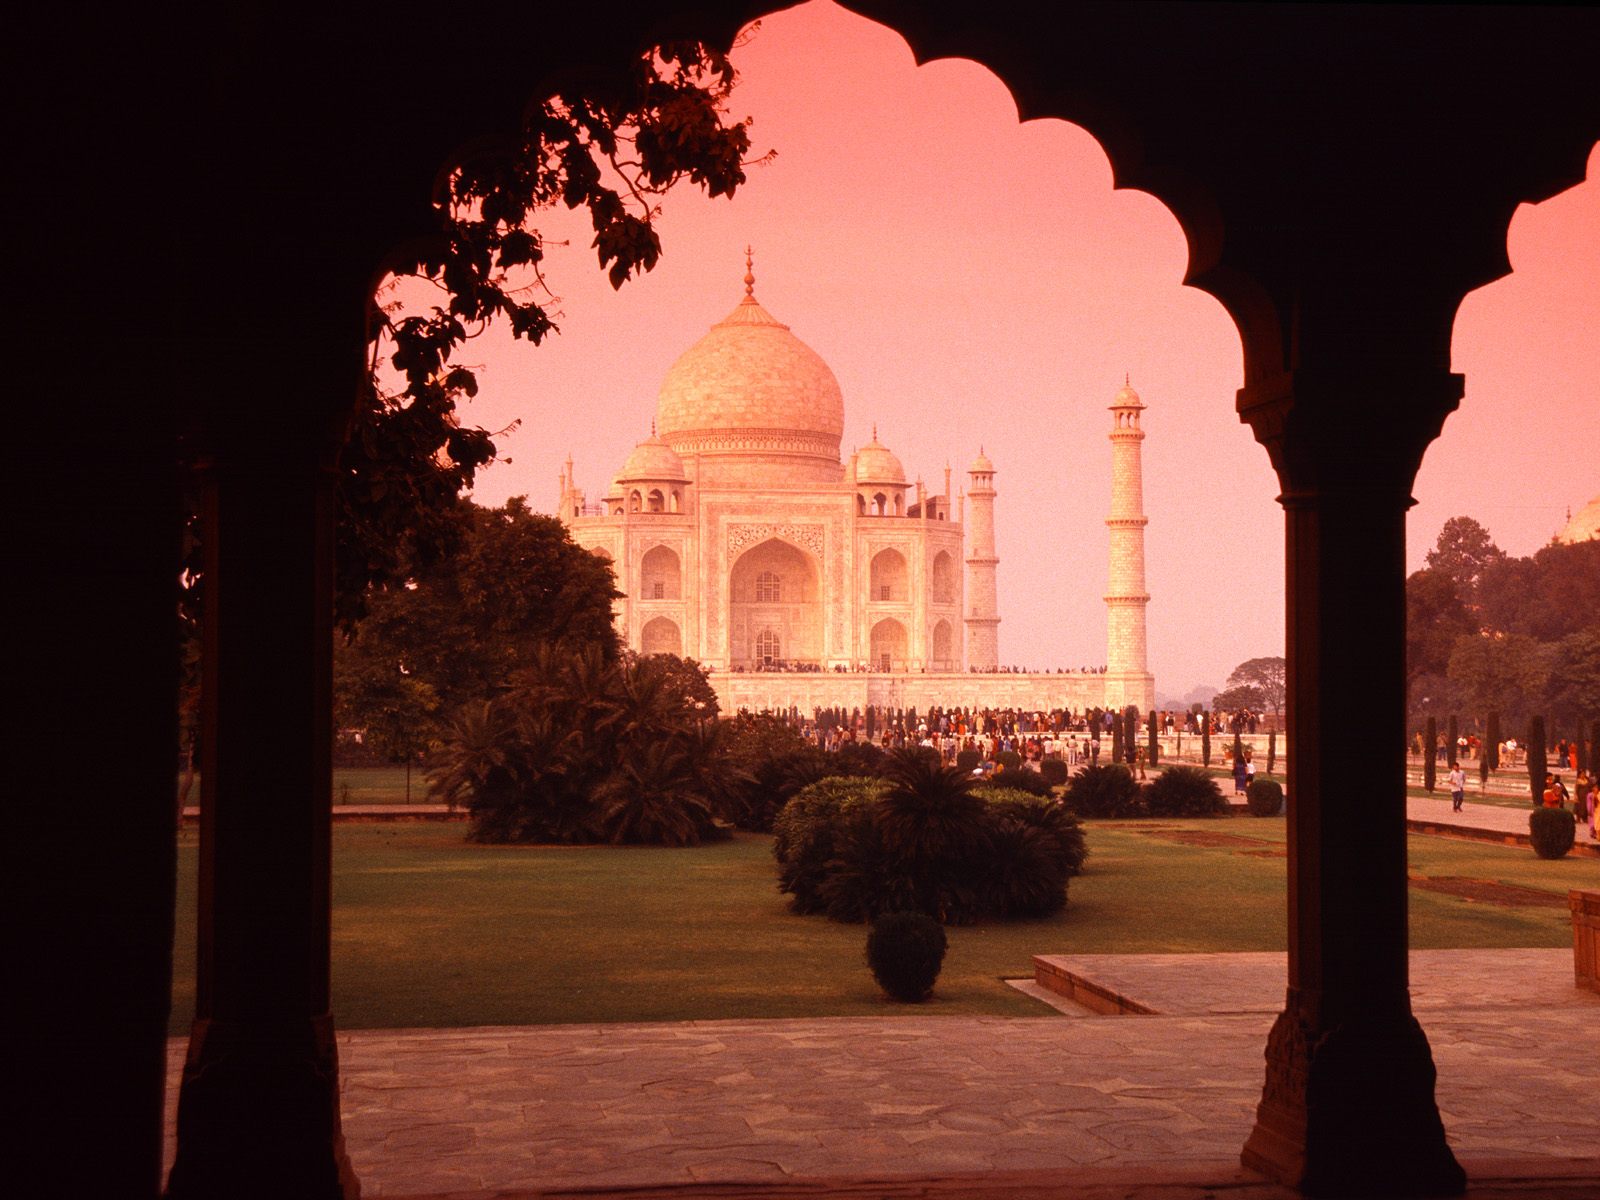 Architectural Wonder Taj Mahal India photo or wallpaper